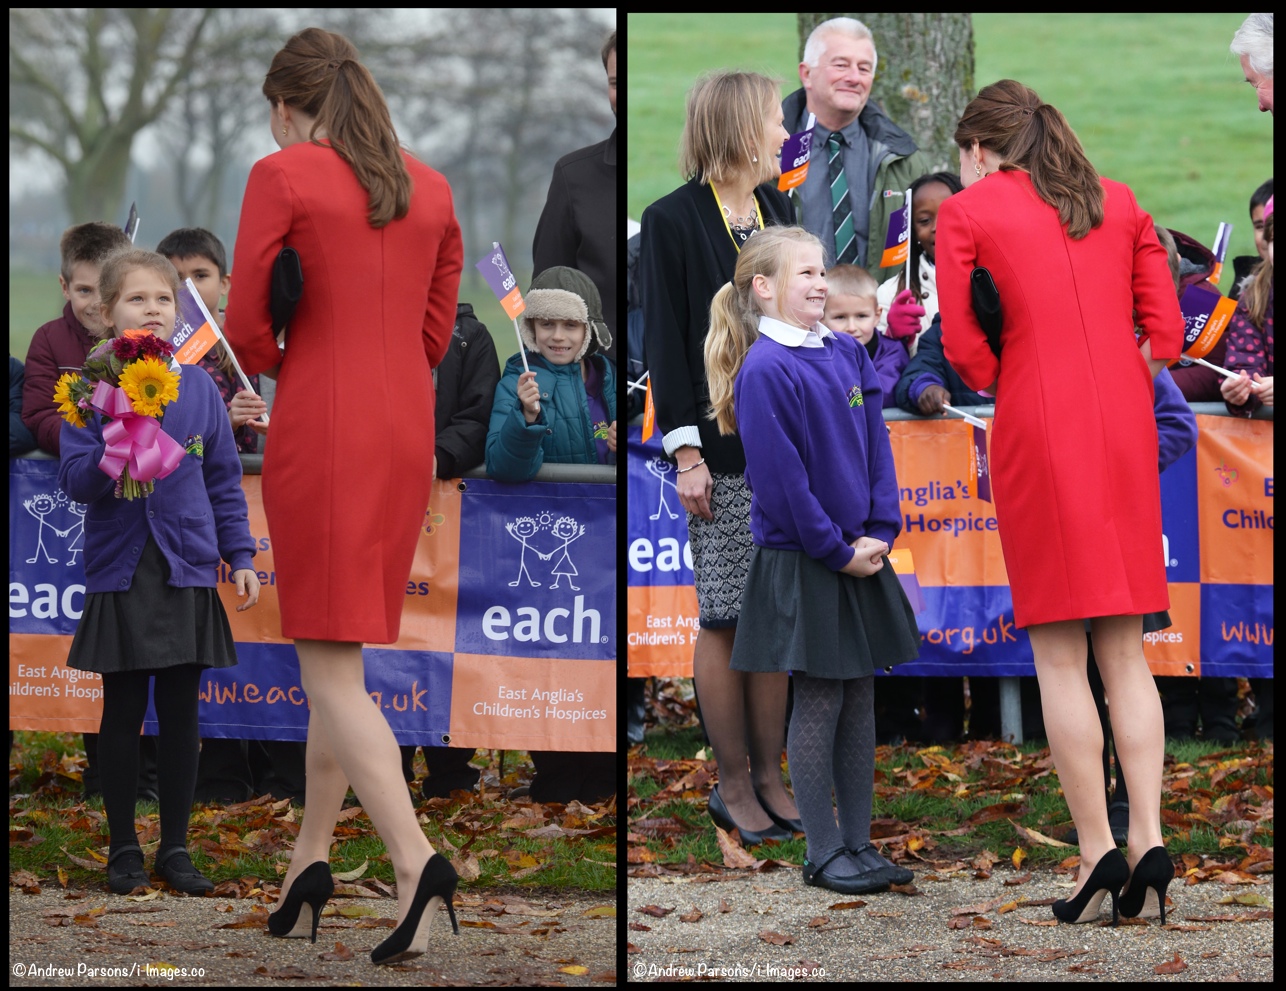 Kate Middleton's handbag obsession has us hooked